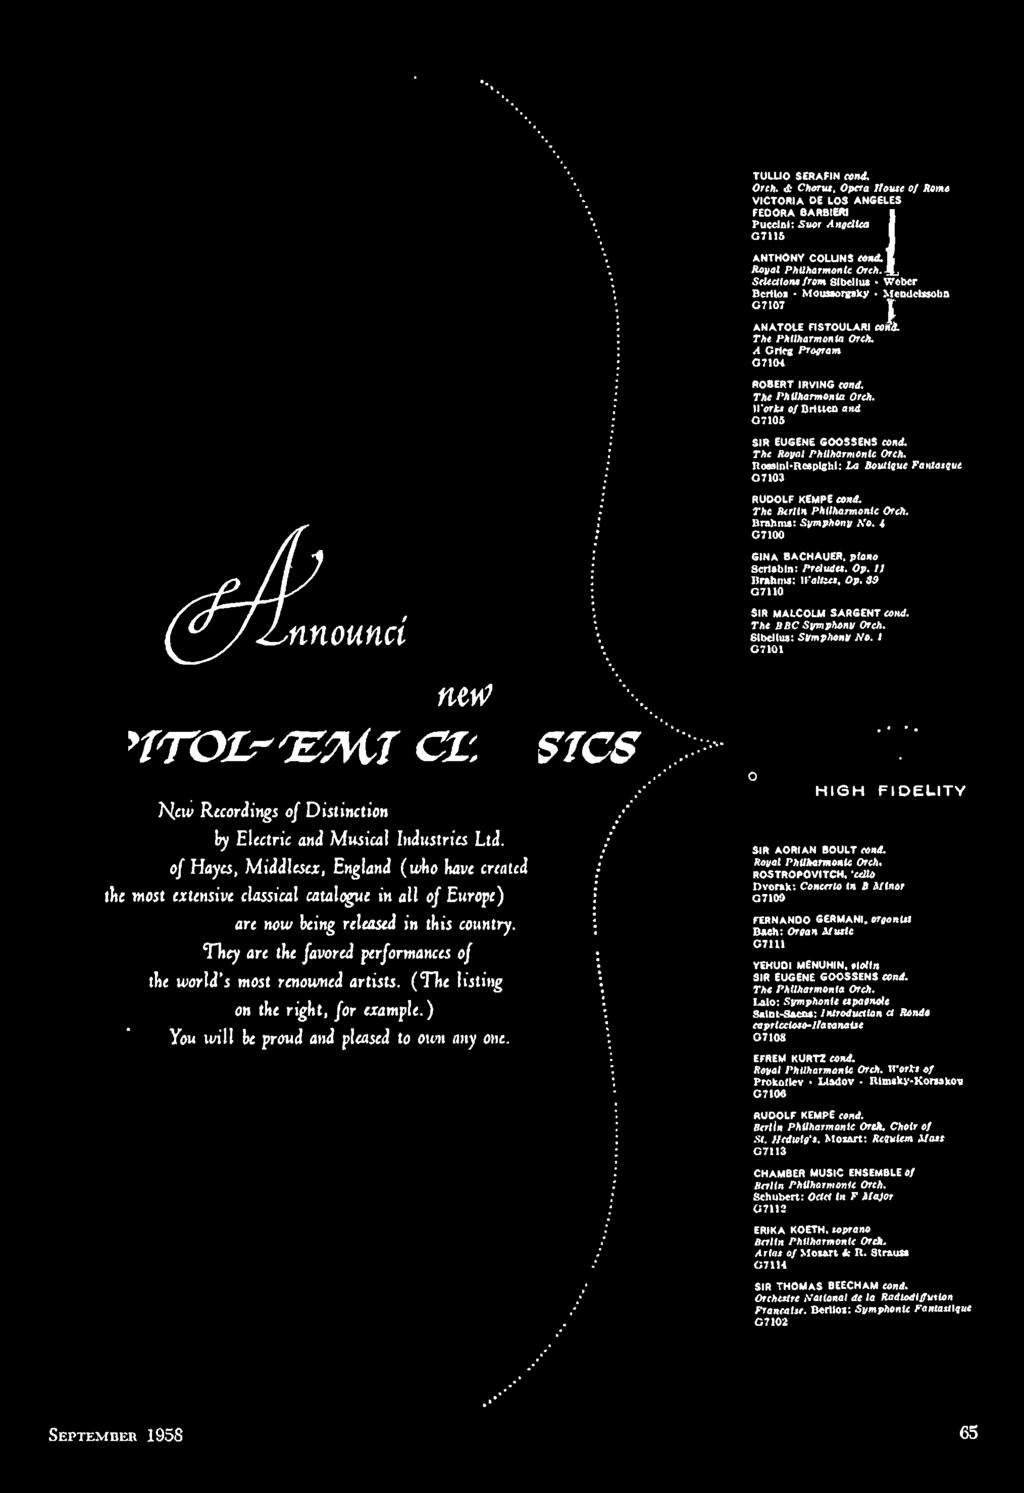 Selections from Sibelius Weber Borlinn Moussorgsky Mendclolm 07107 ANATOLE FISTOULARI cond. The Phllhnrmmnfn Orch. A Grfee Progra,n 07104 ROBERT IRVING tond. The l'huharmontn Oreh.